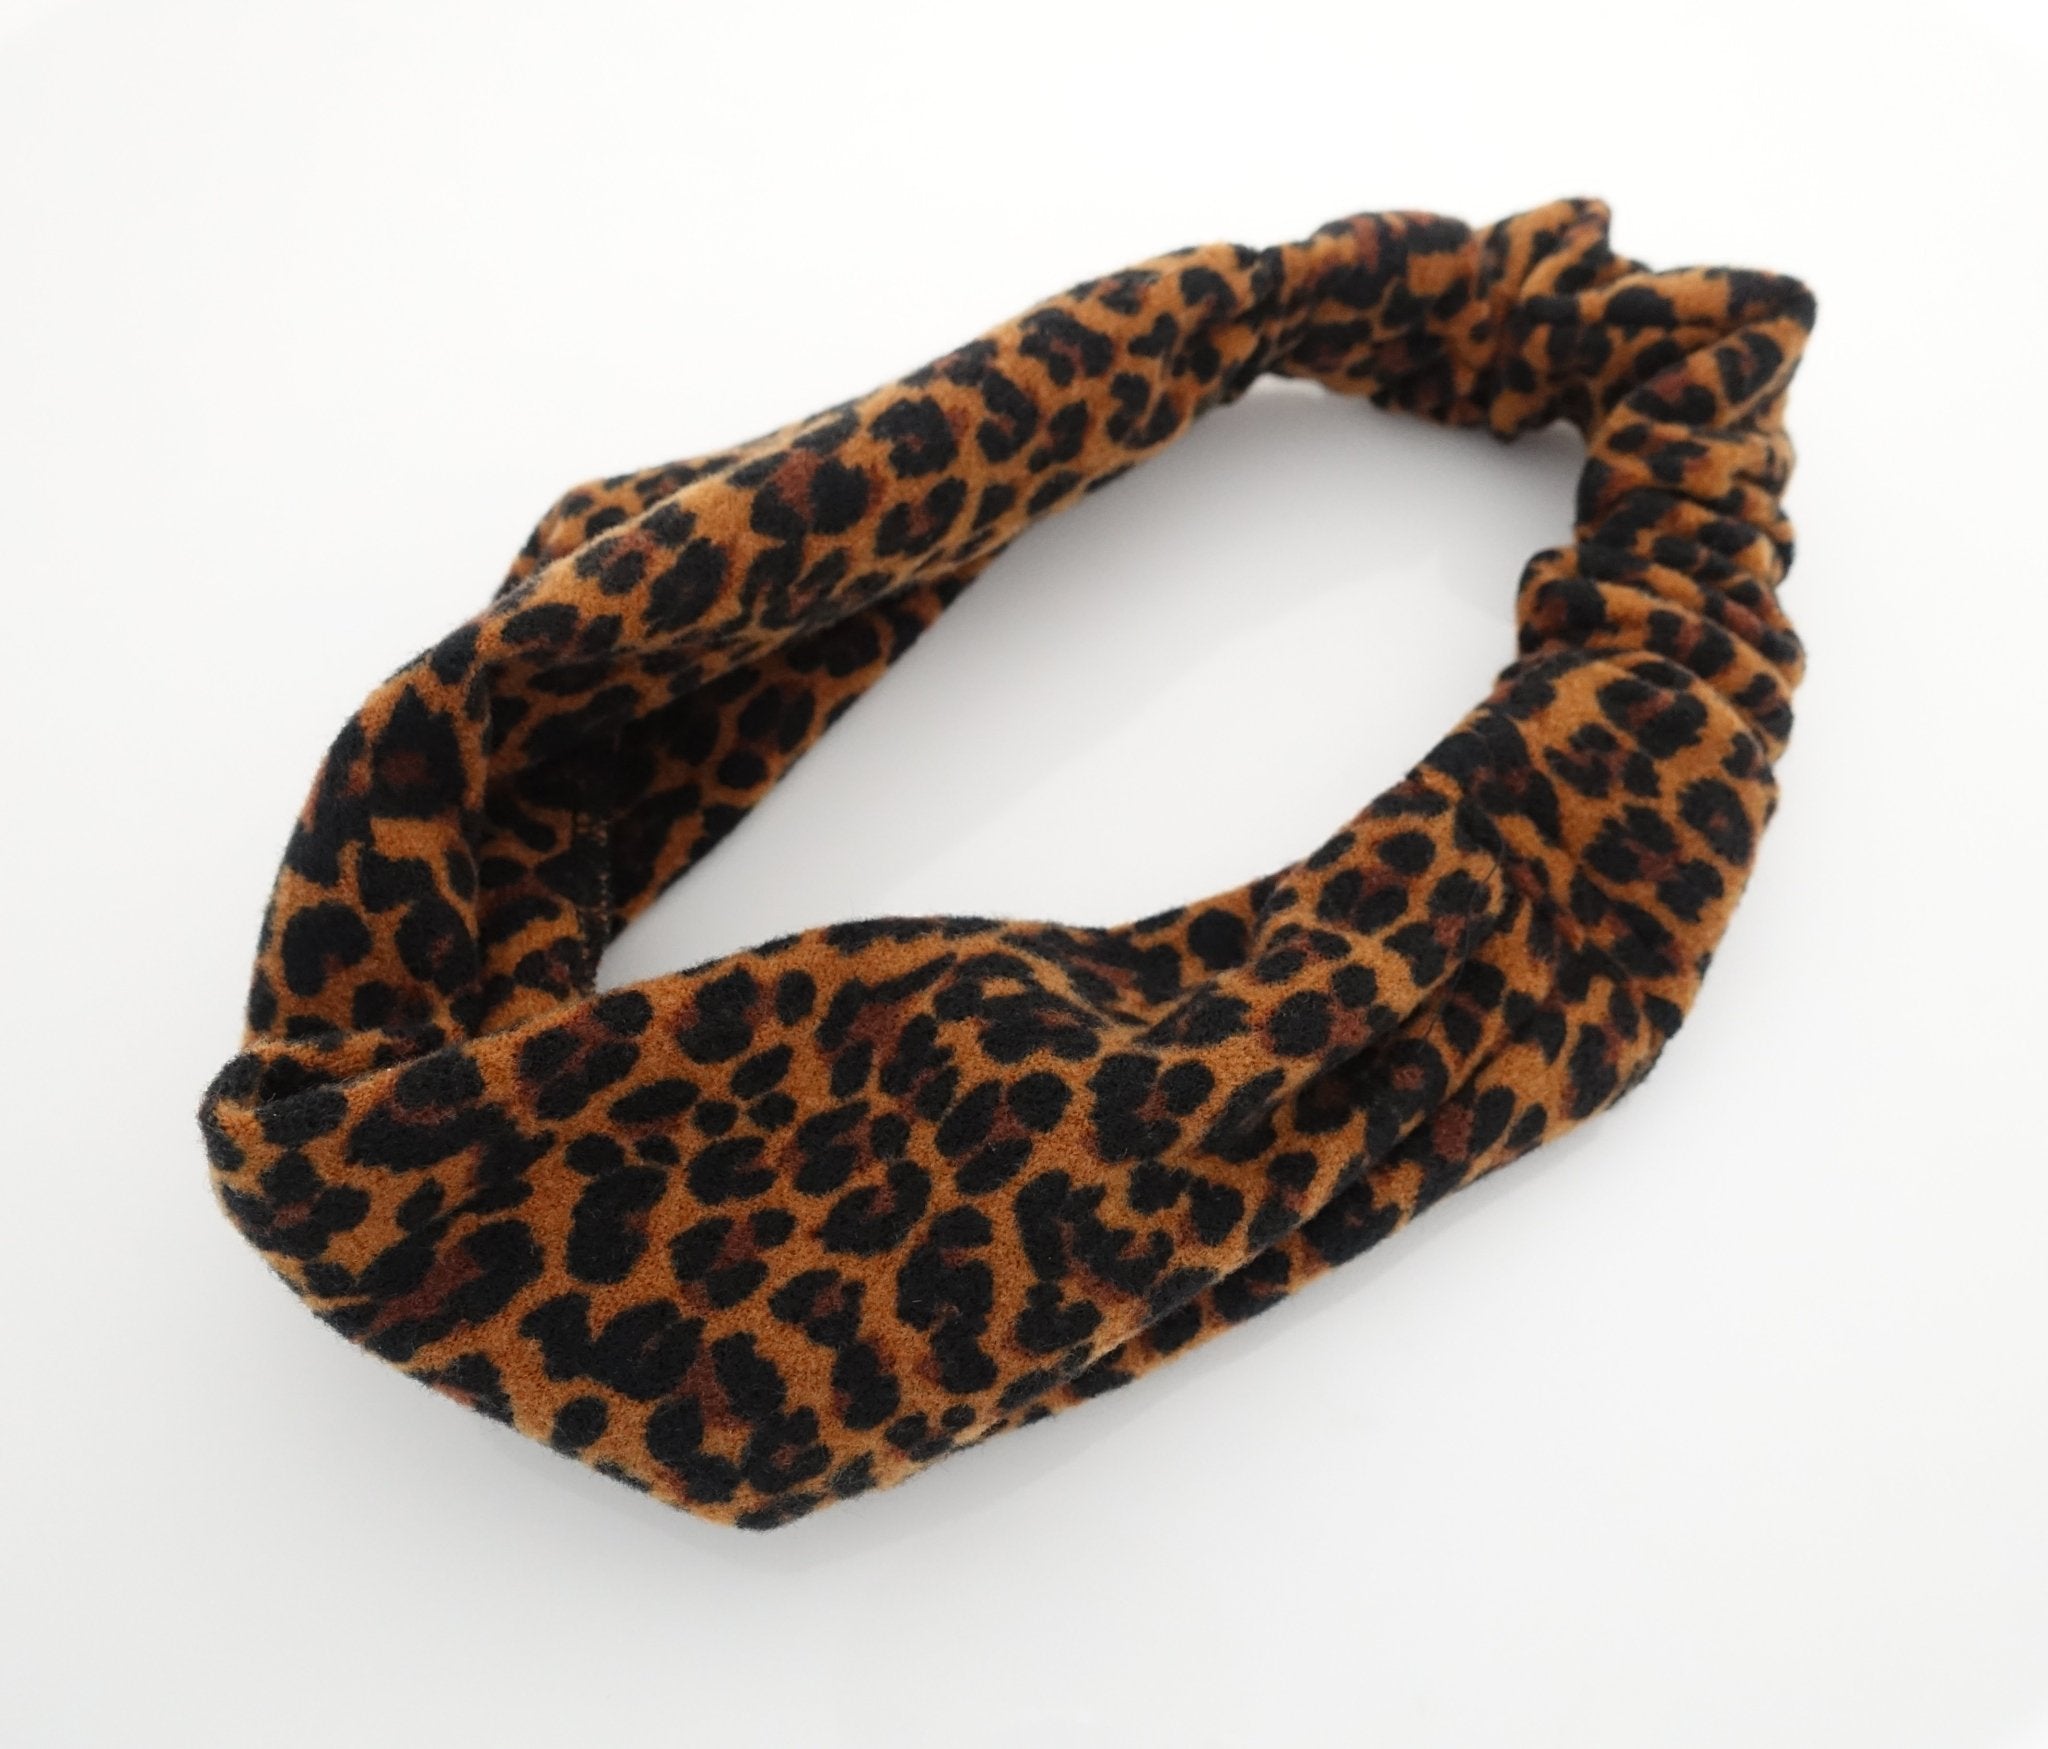 veryshine.com hairband/headband leopard print headwrap fashion headband for women